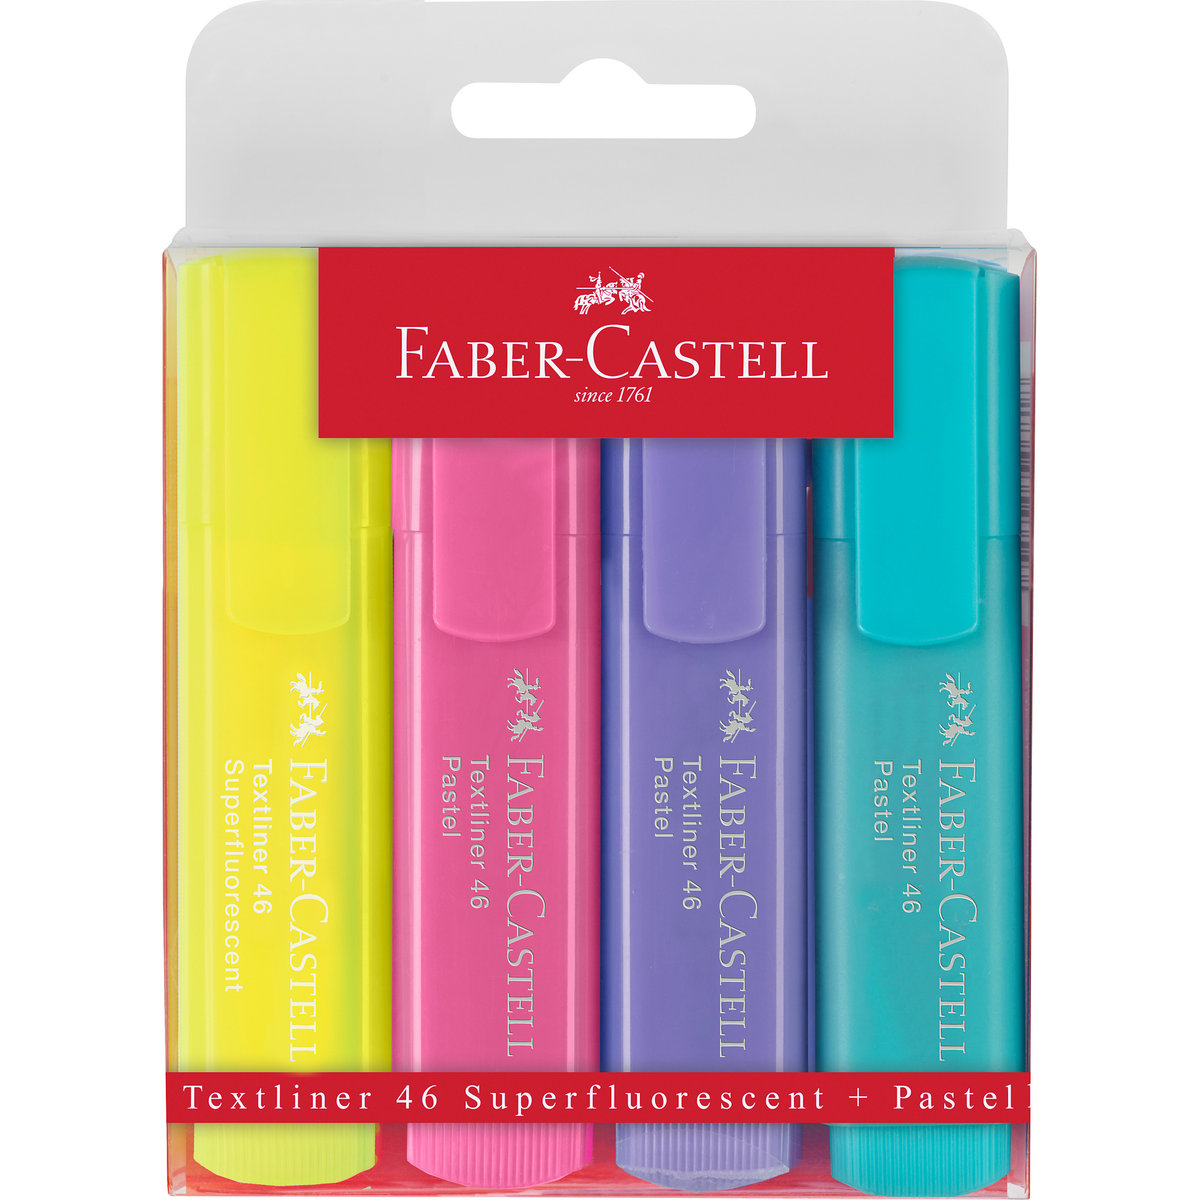 Faber-Castell zakreślacz, 4 kolory